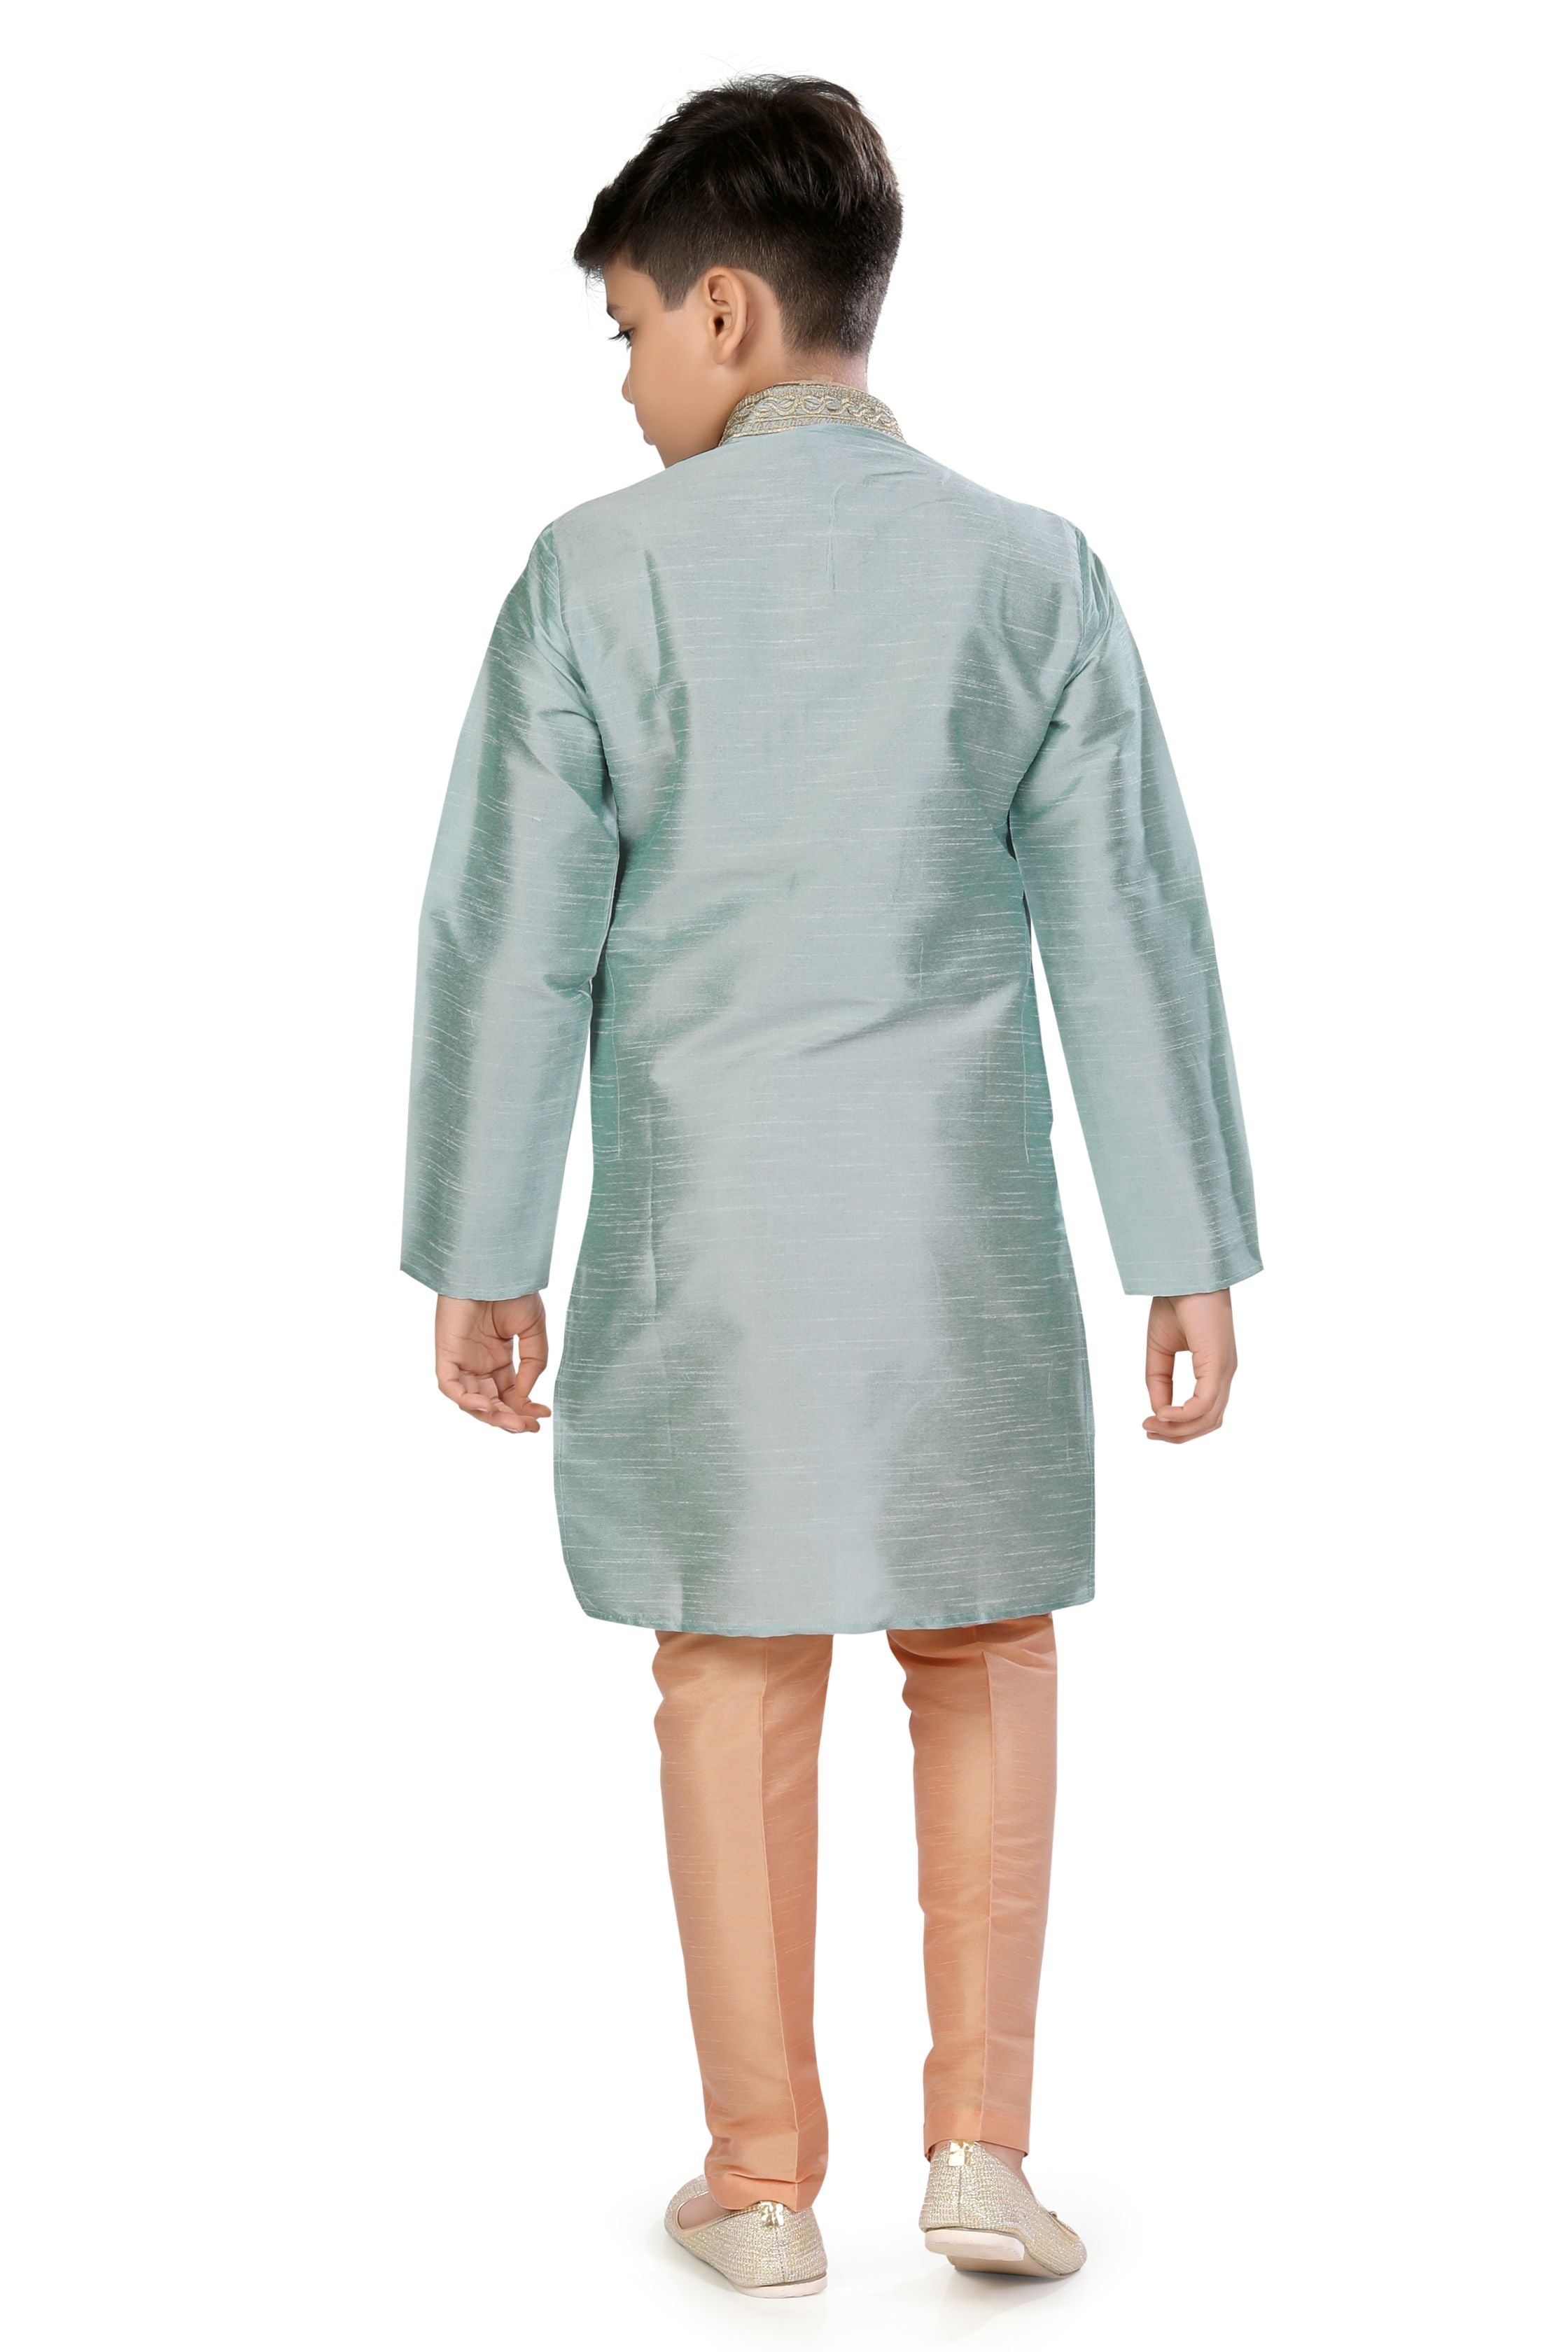 Boys Dupion Silk Embroidered Kurta PaJama Set in Sea Green Colour - Premium kurta pajama from Dapper Ethnic - Just $55! Shop now at Dulhan Exclusives